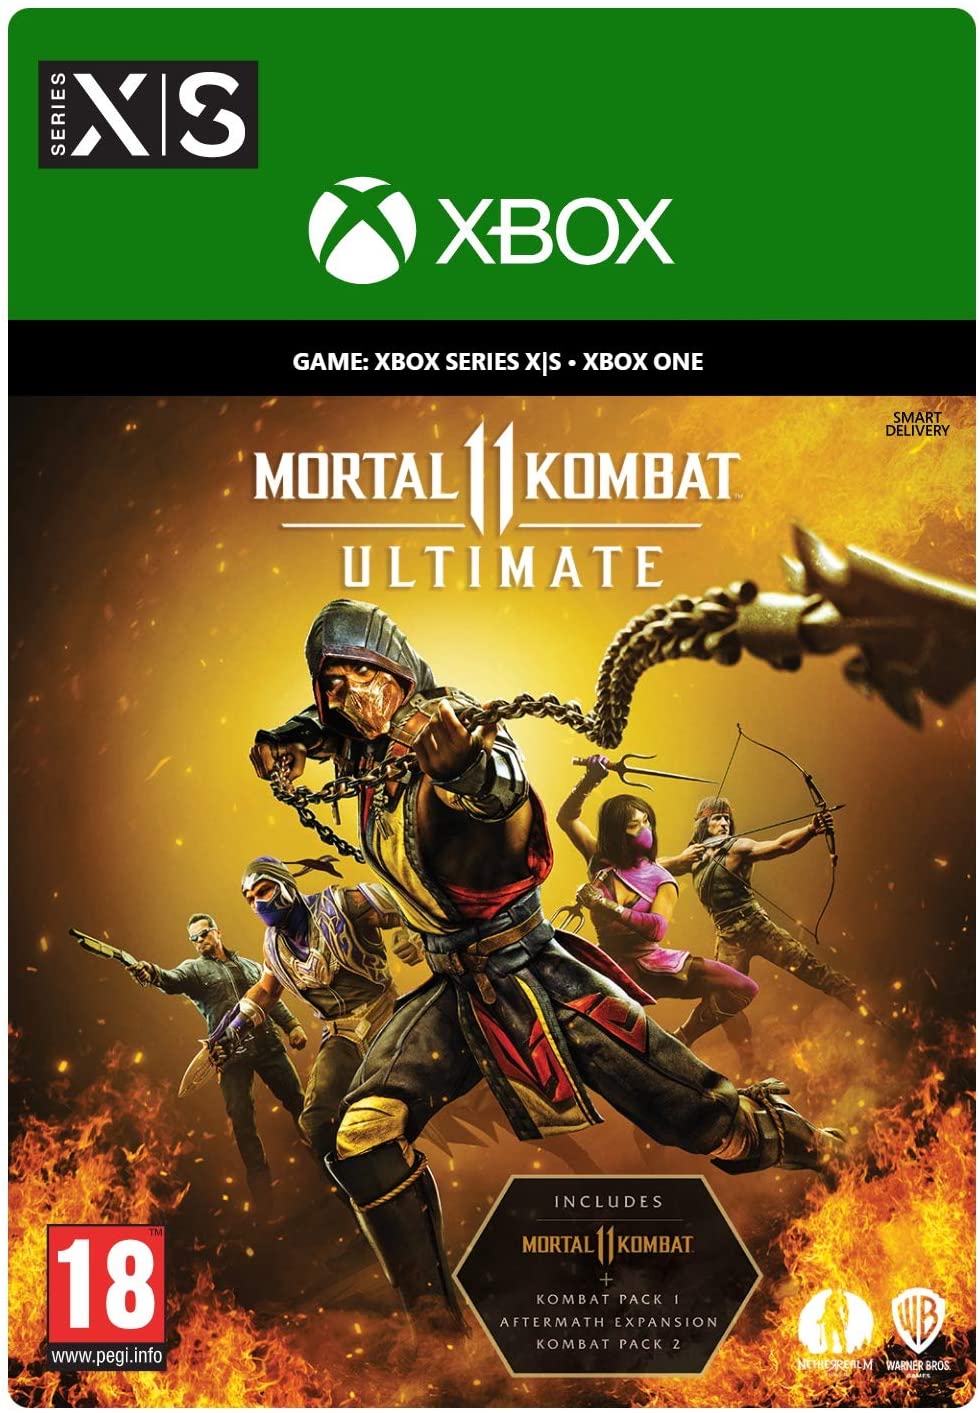 Buy Mortal Kombat 11 Kombat Pack 2 CD Key Compare Prices